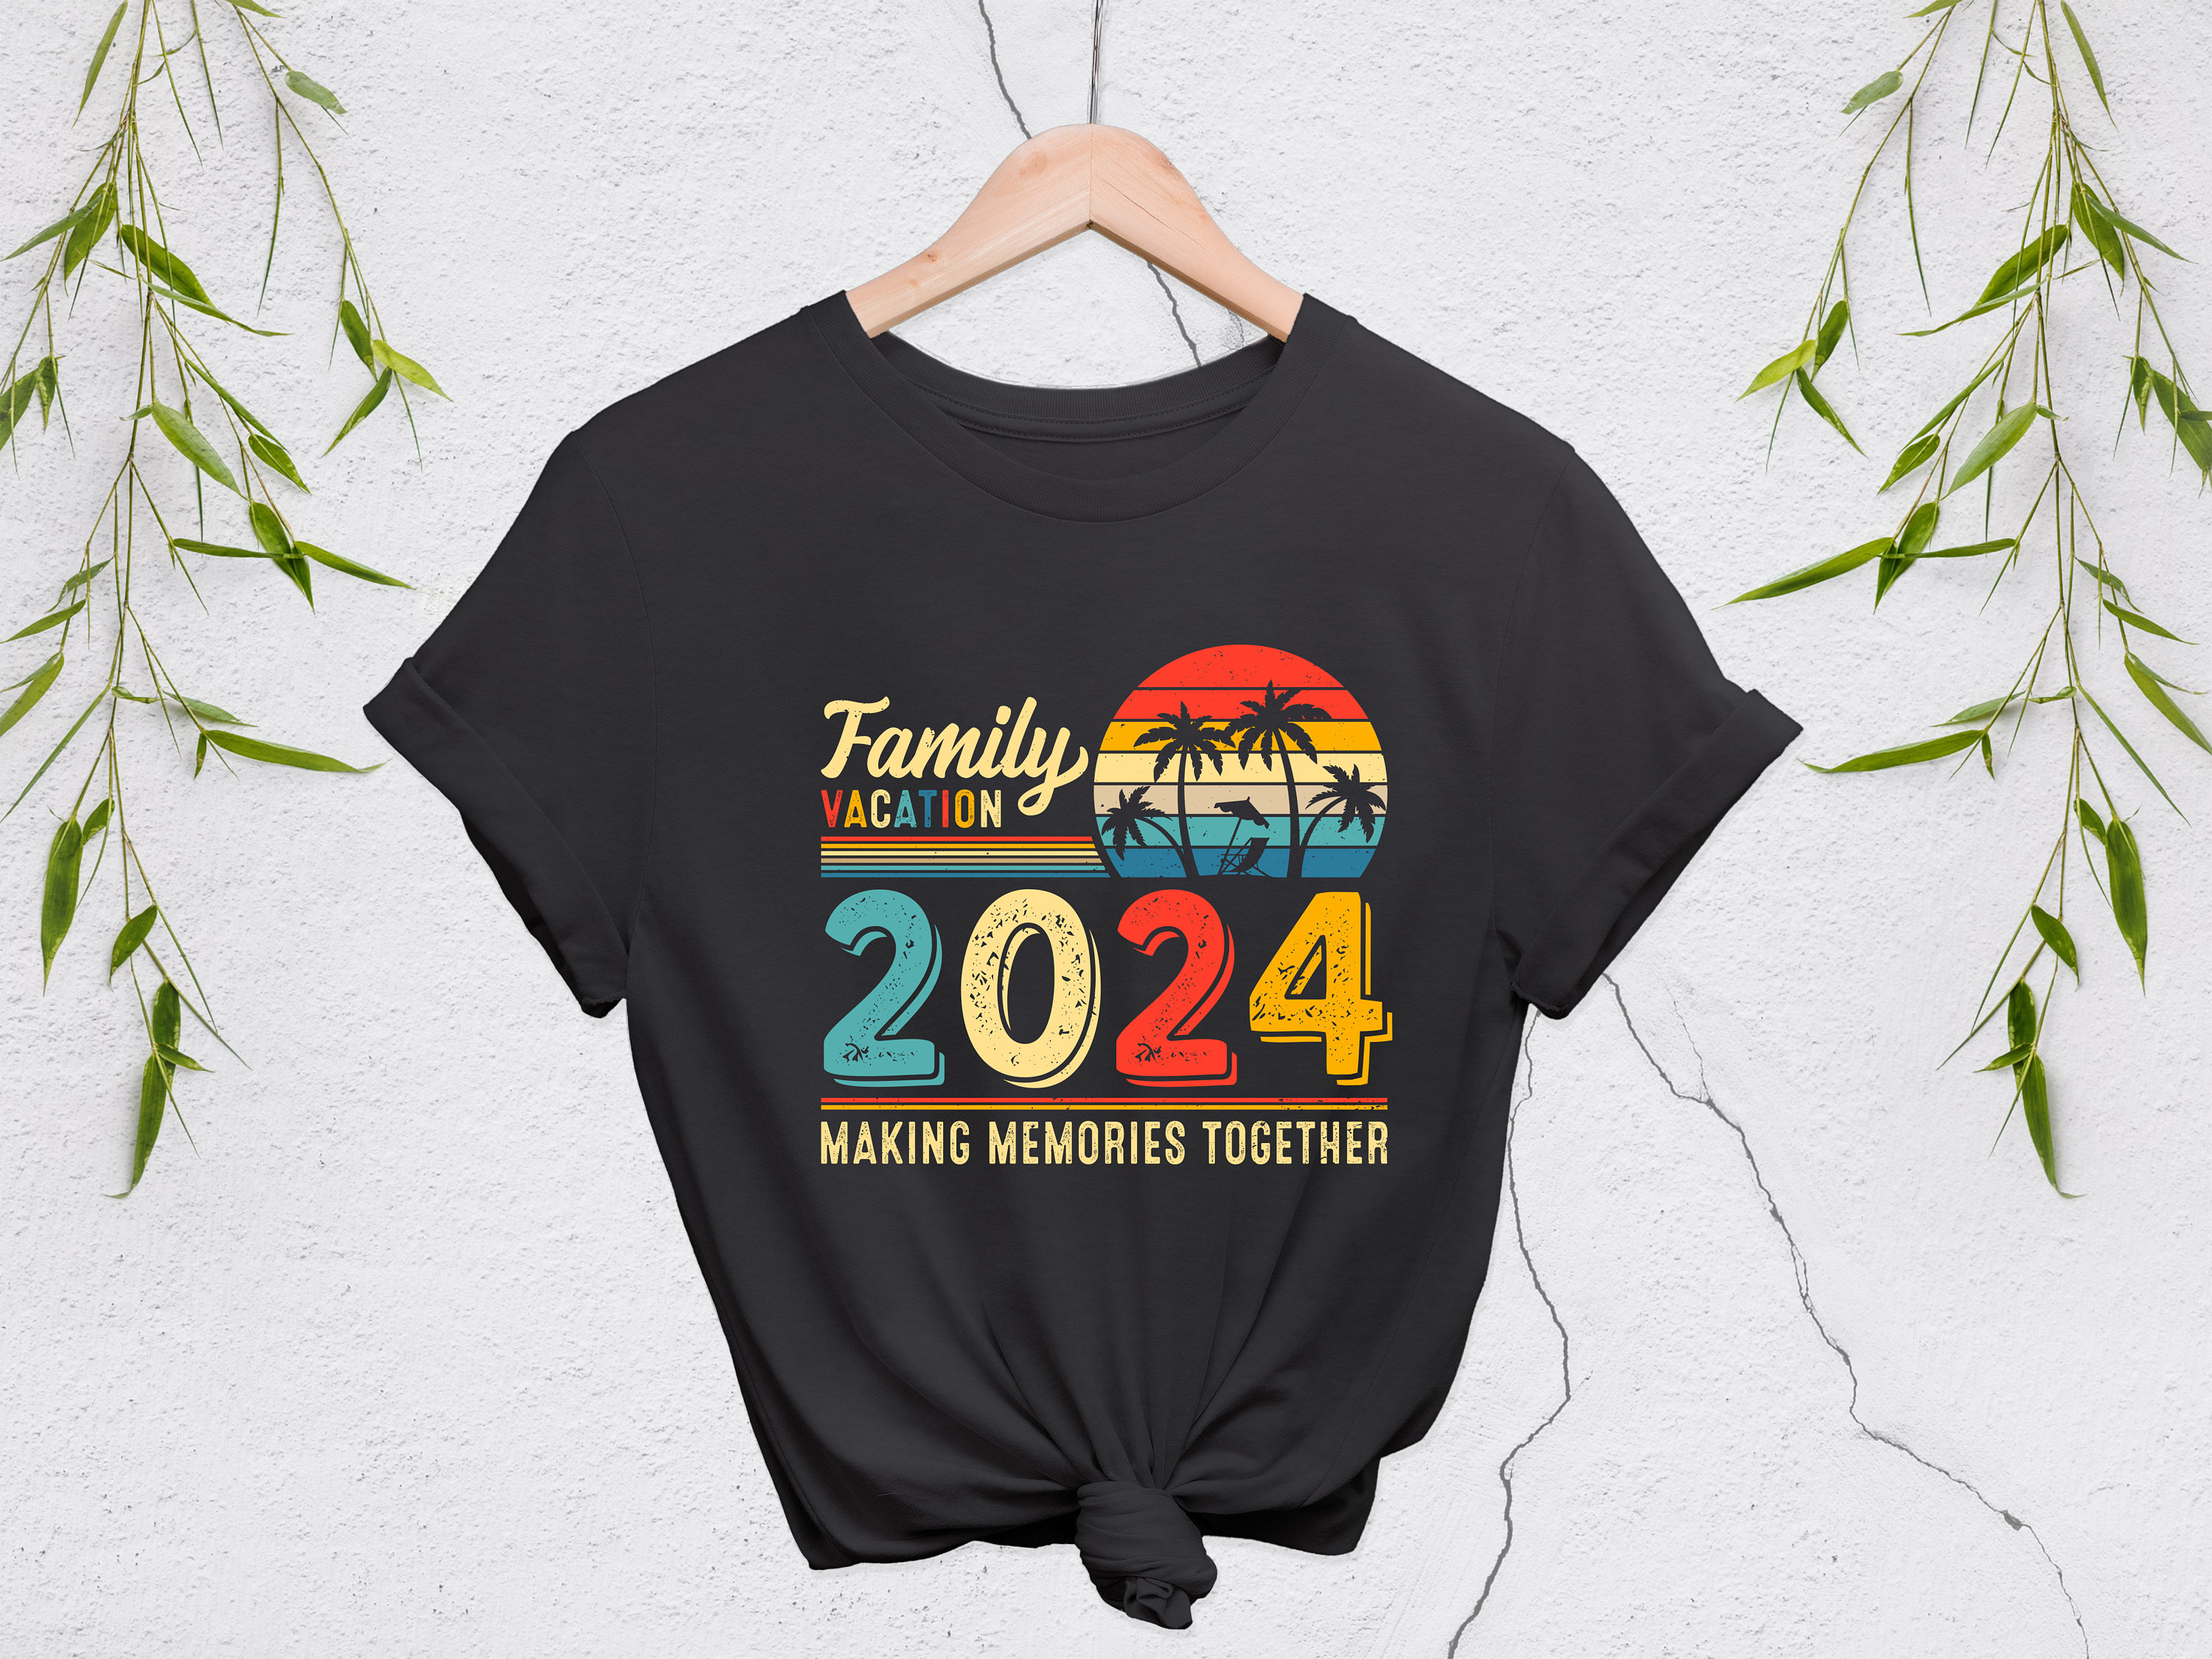 Discover Family Vacation 2024 Making Memories Together Shirt, Family Cruise Shirts, Family Holiday Shirt, Summer Vacation Tee, Family Travel Shirt